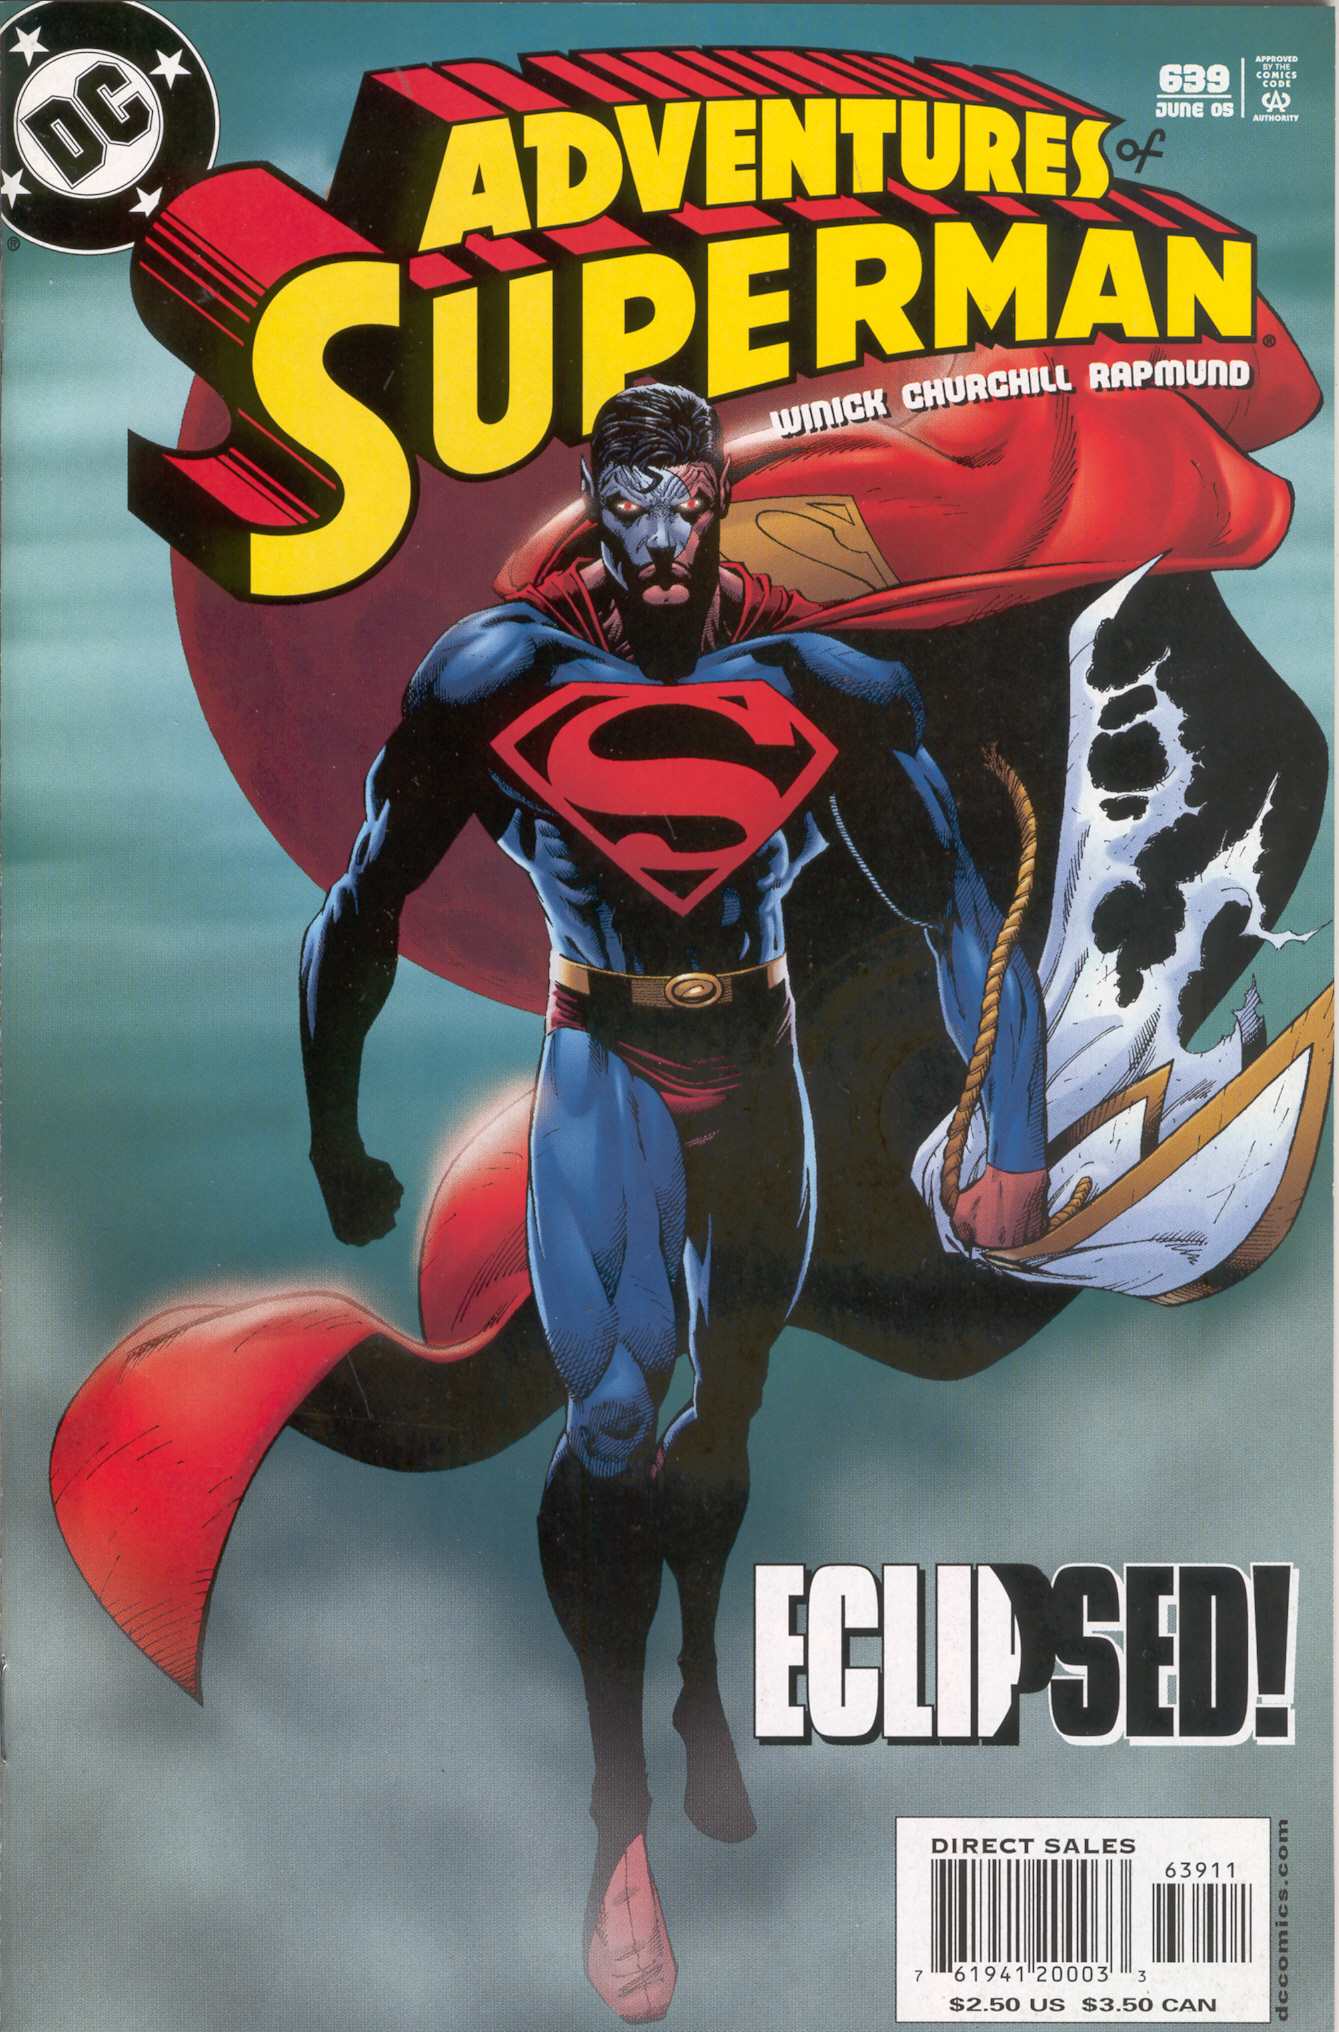 ADVENTURES OF SUPERMAN #639